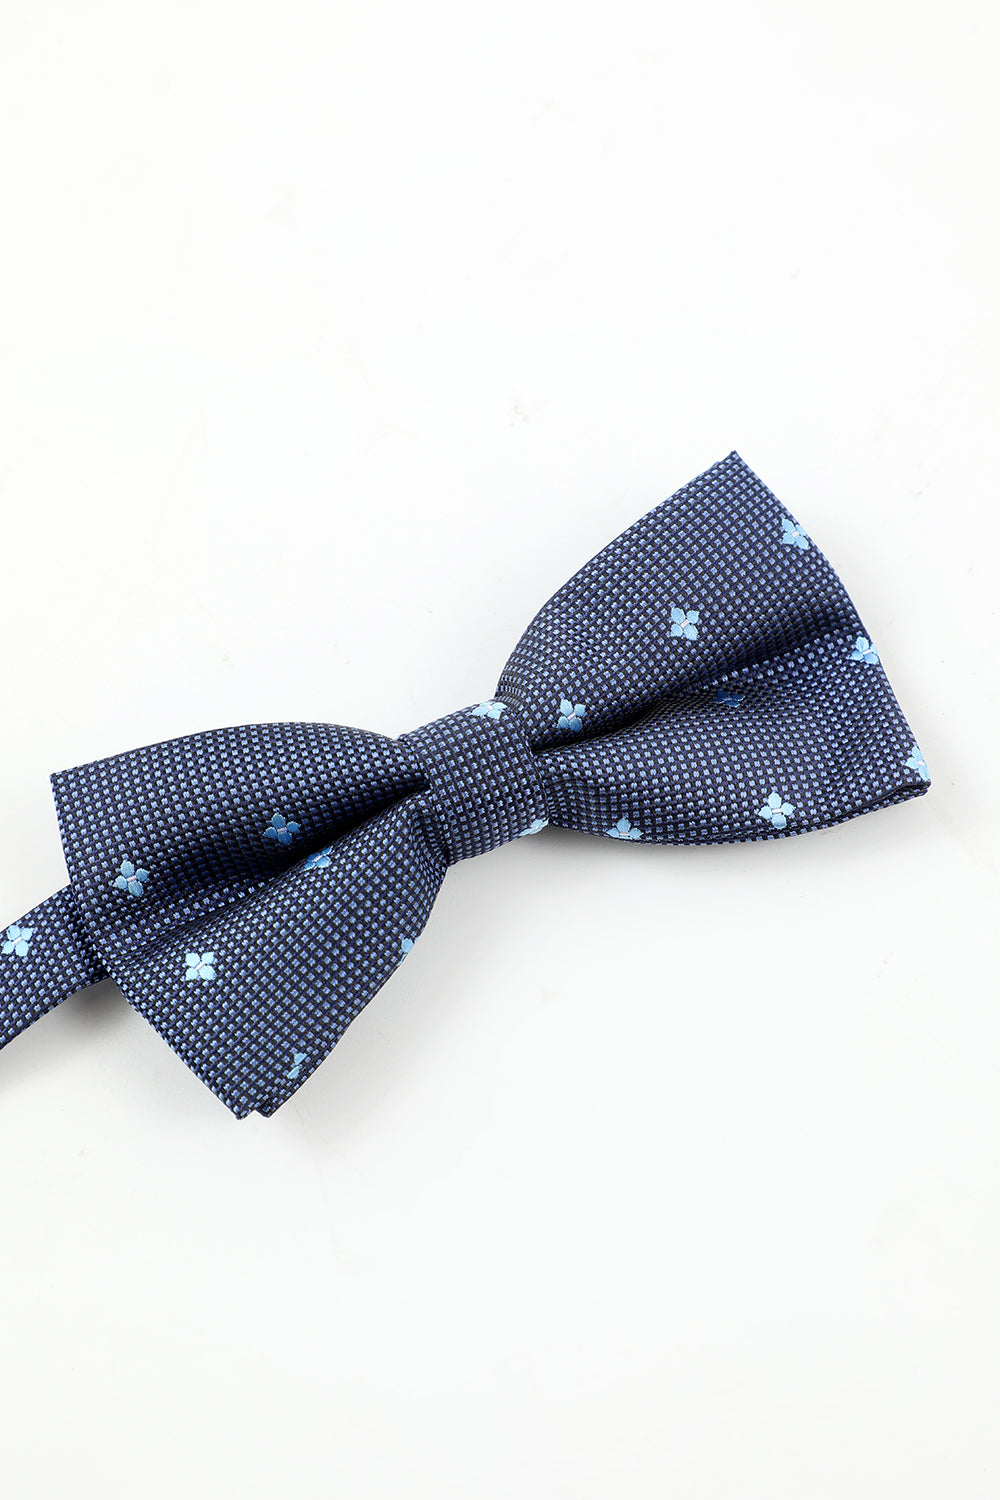 Navy Men's 5-Piece Accessory Set Tie and Bow Tie Pocket Square Flower Lapel Pin Tie Clip